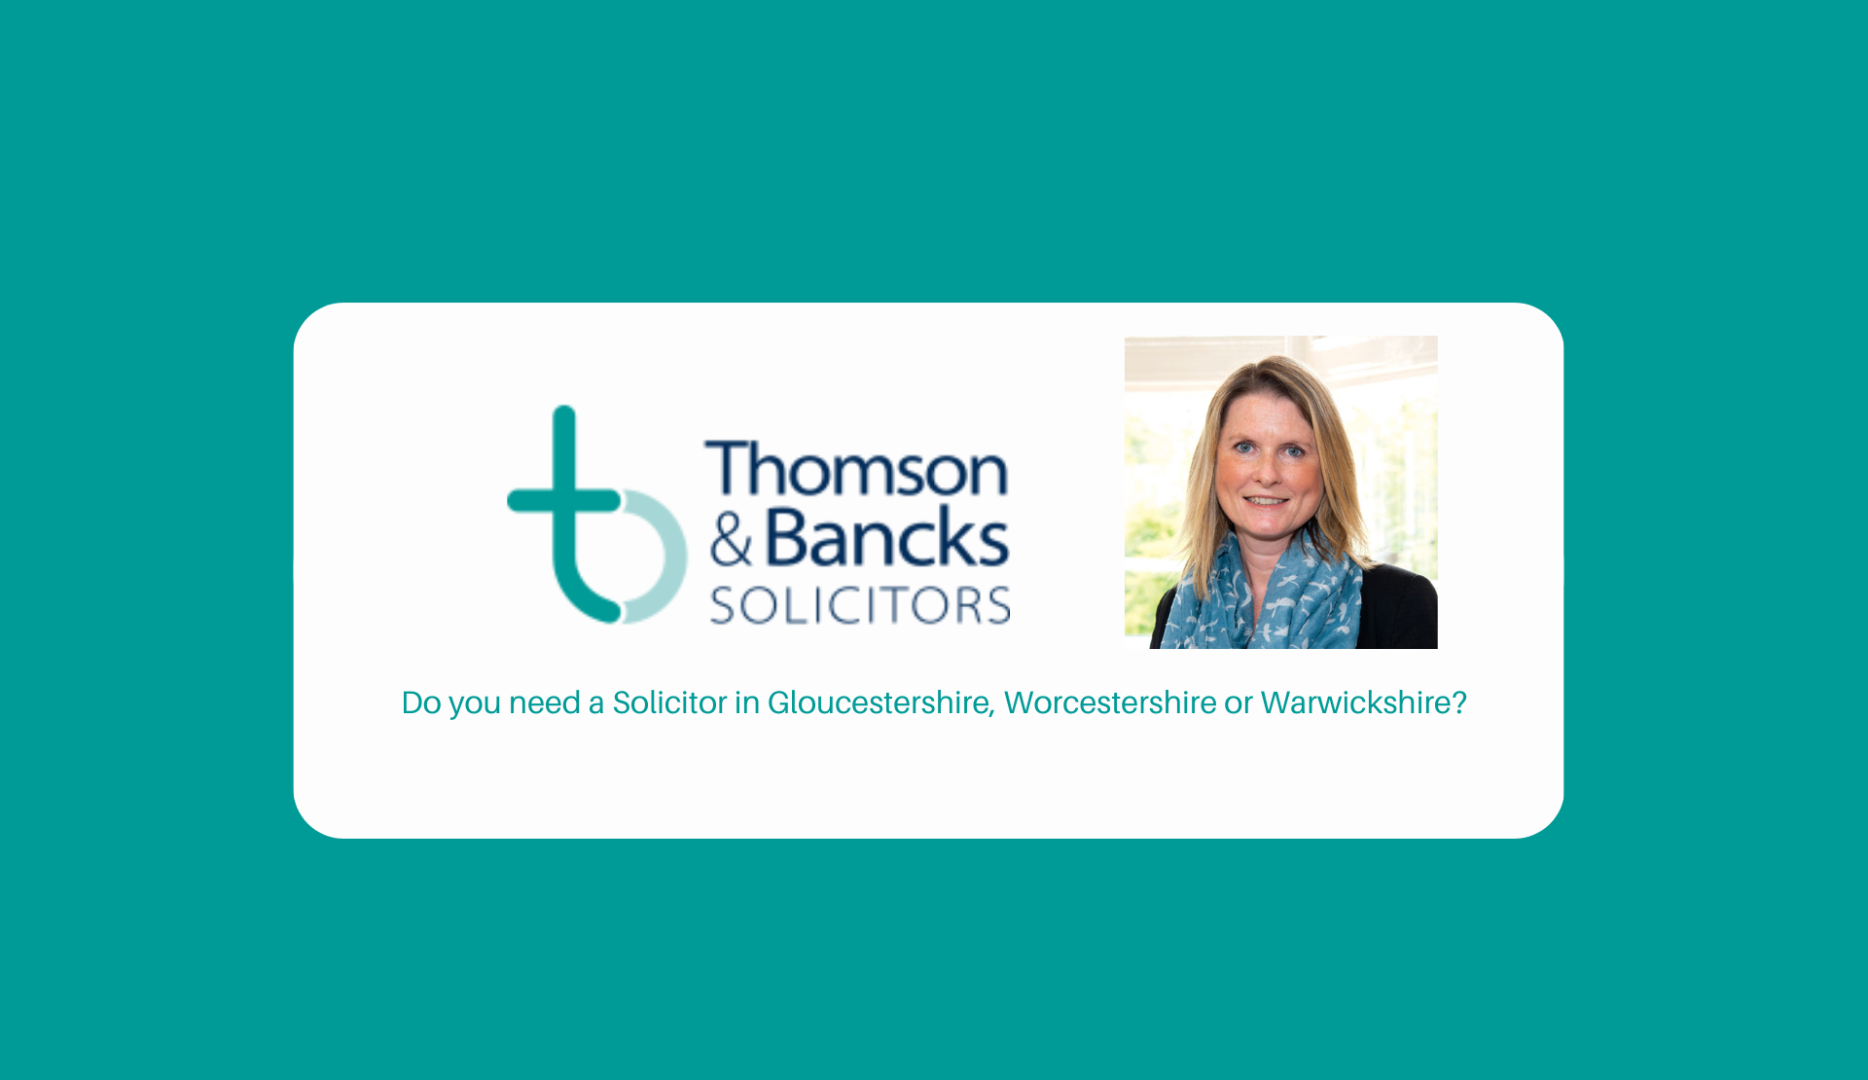 Thomson & Bancks Solicitors in Cheltenham